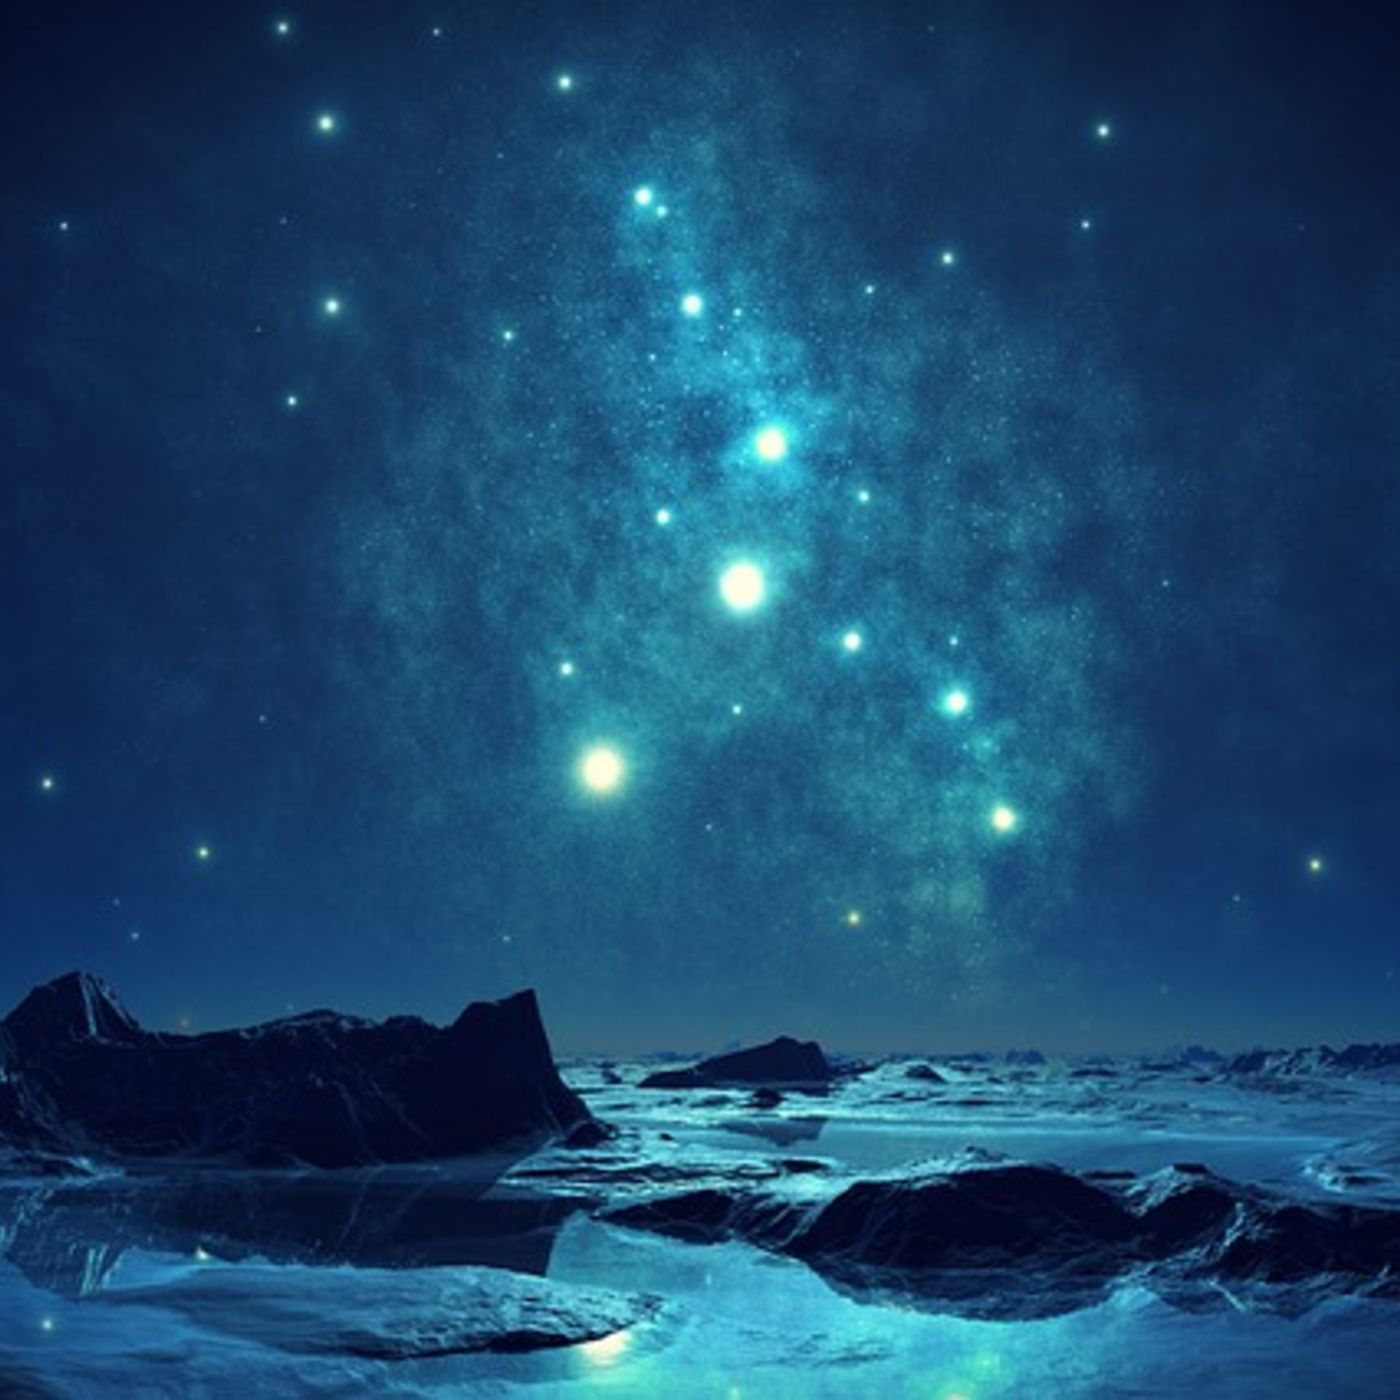 The Stargazer - Short Meditation Rest Meditative Music